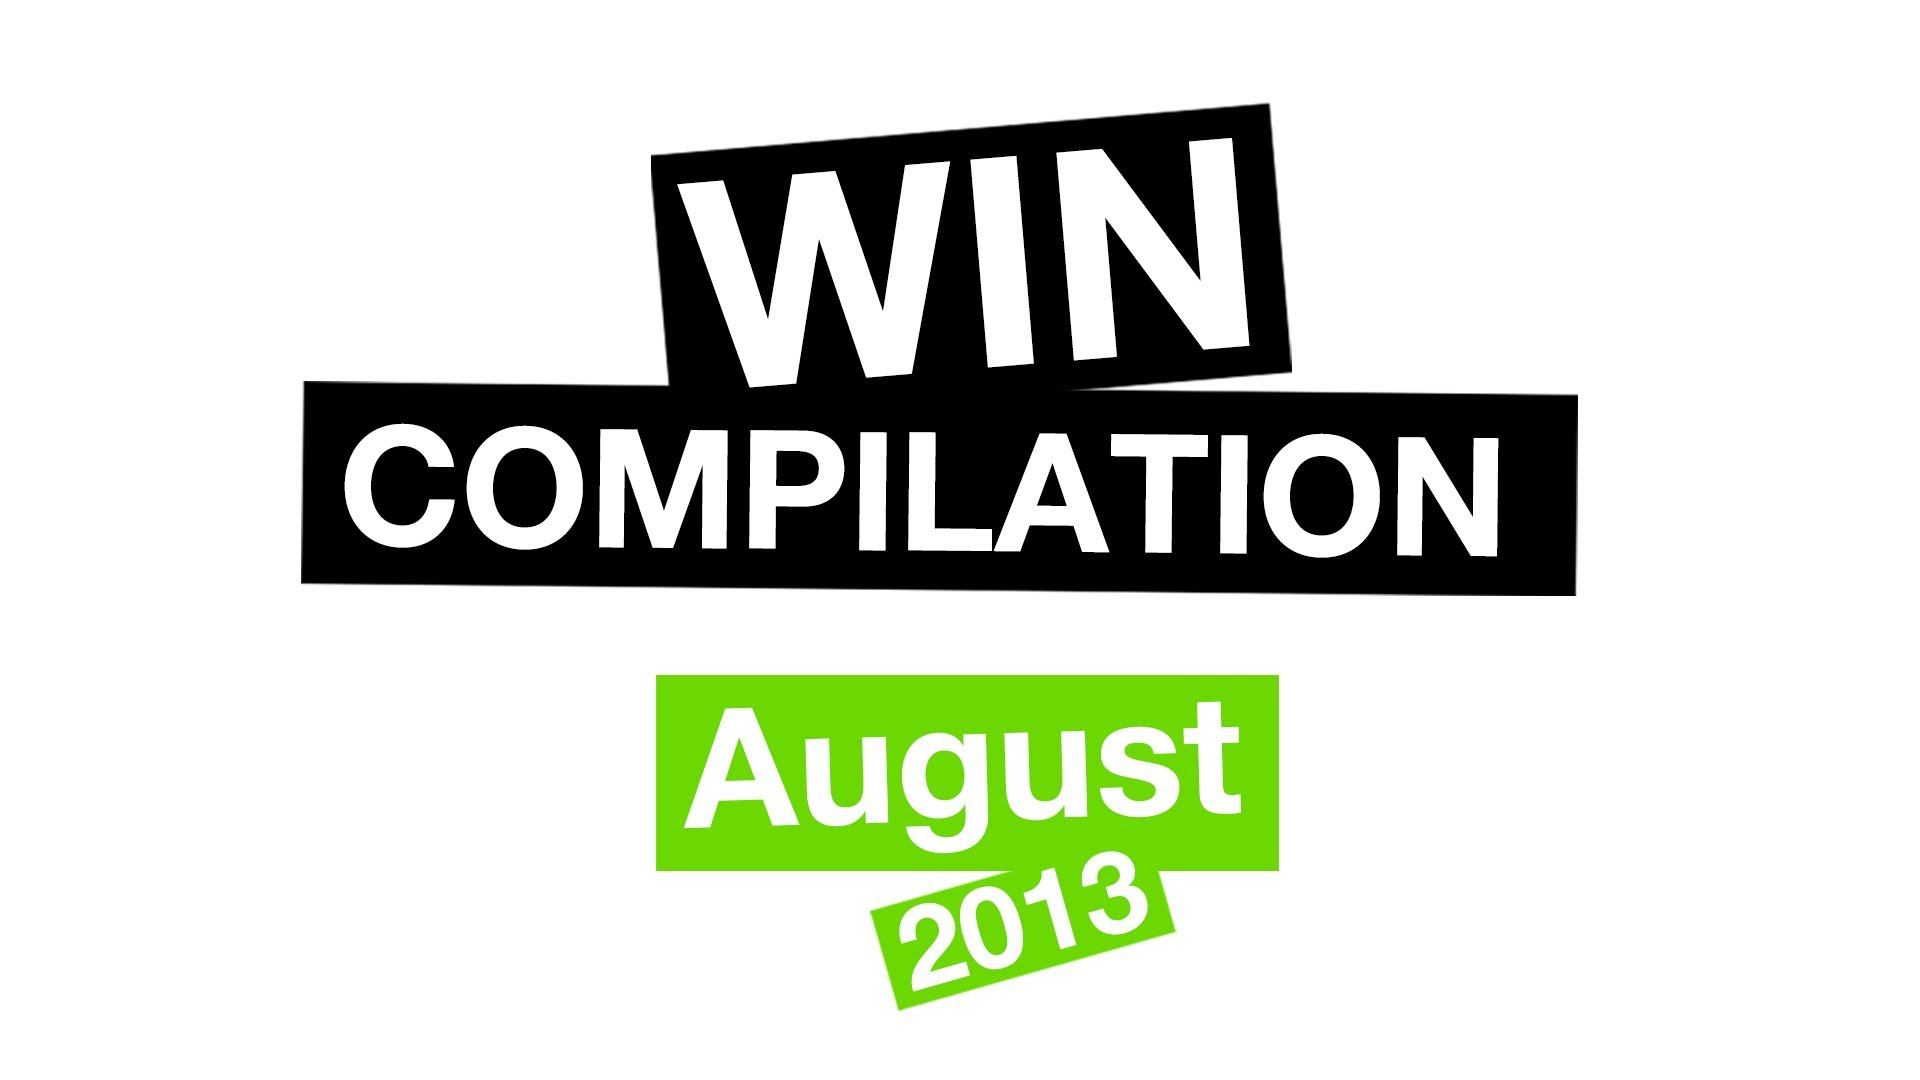 WIN Compilation August 2013 | 2013 | Was is hier eigentlich los?